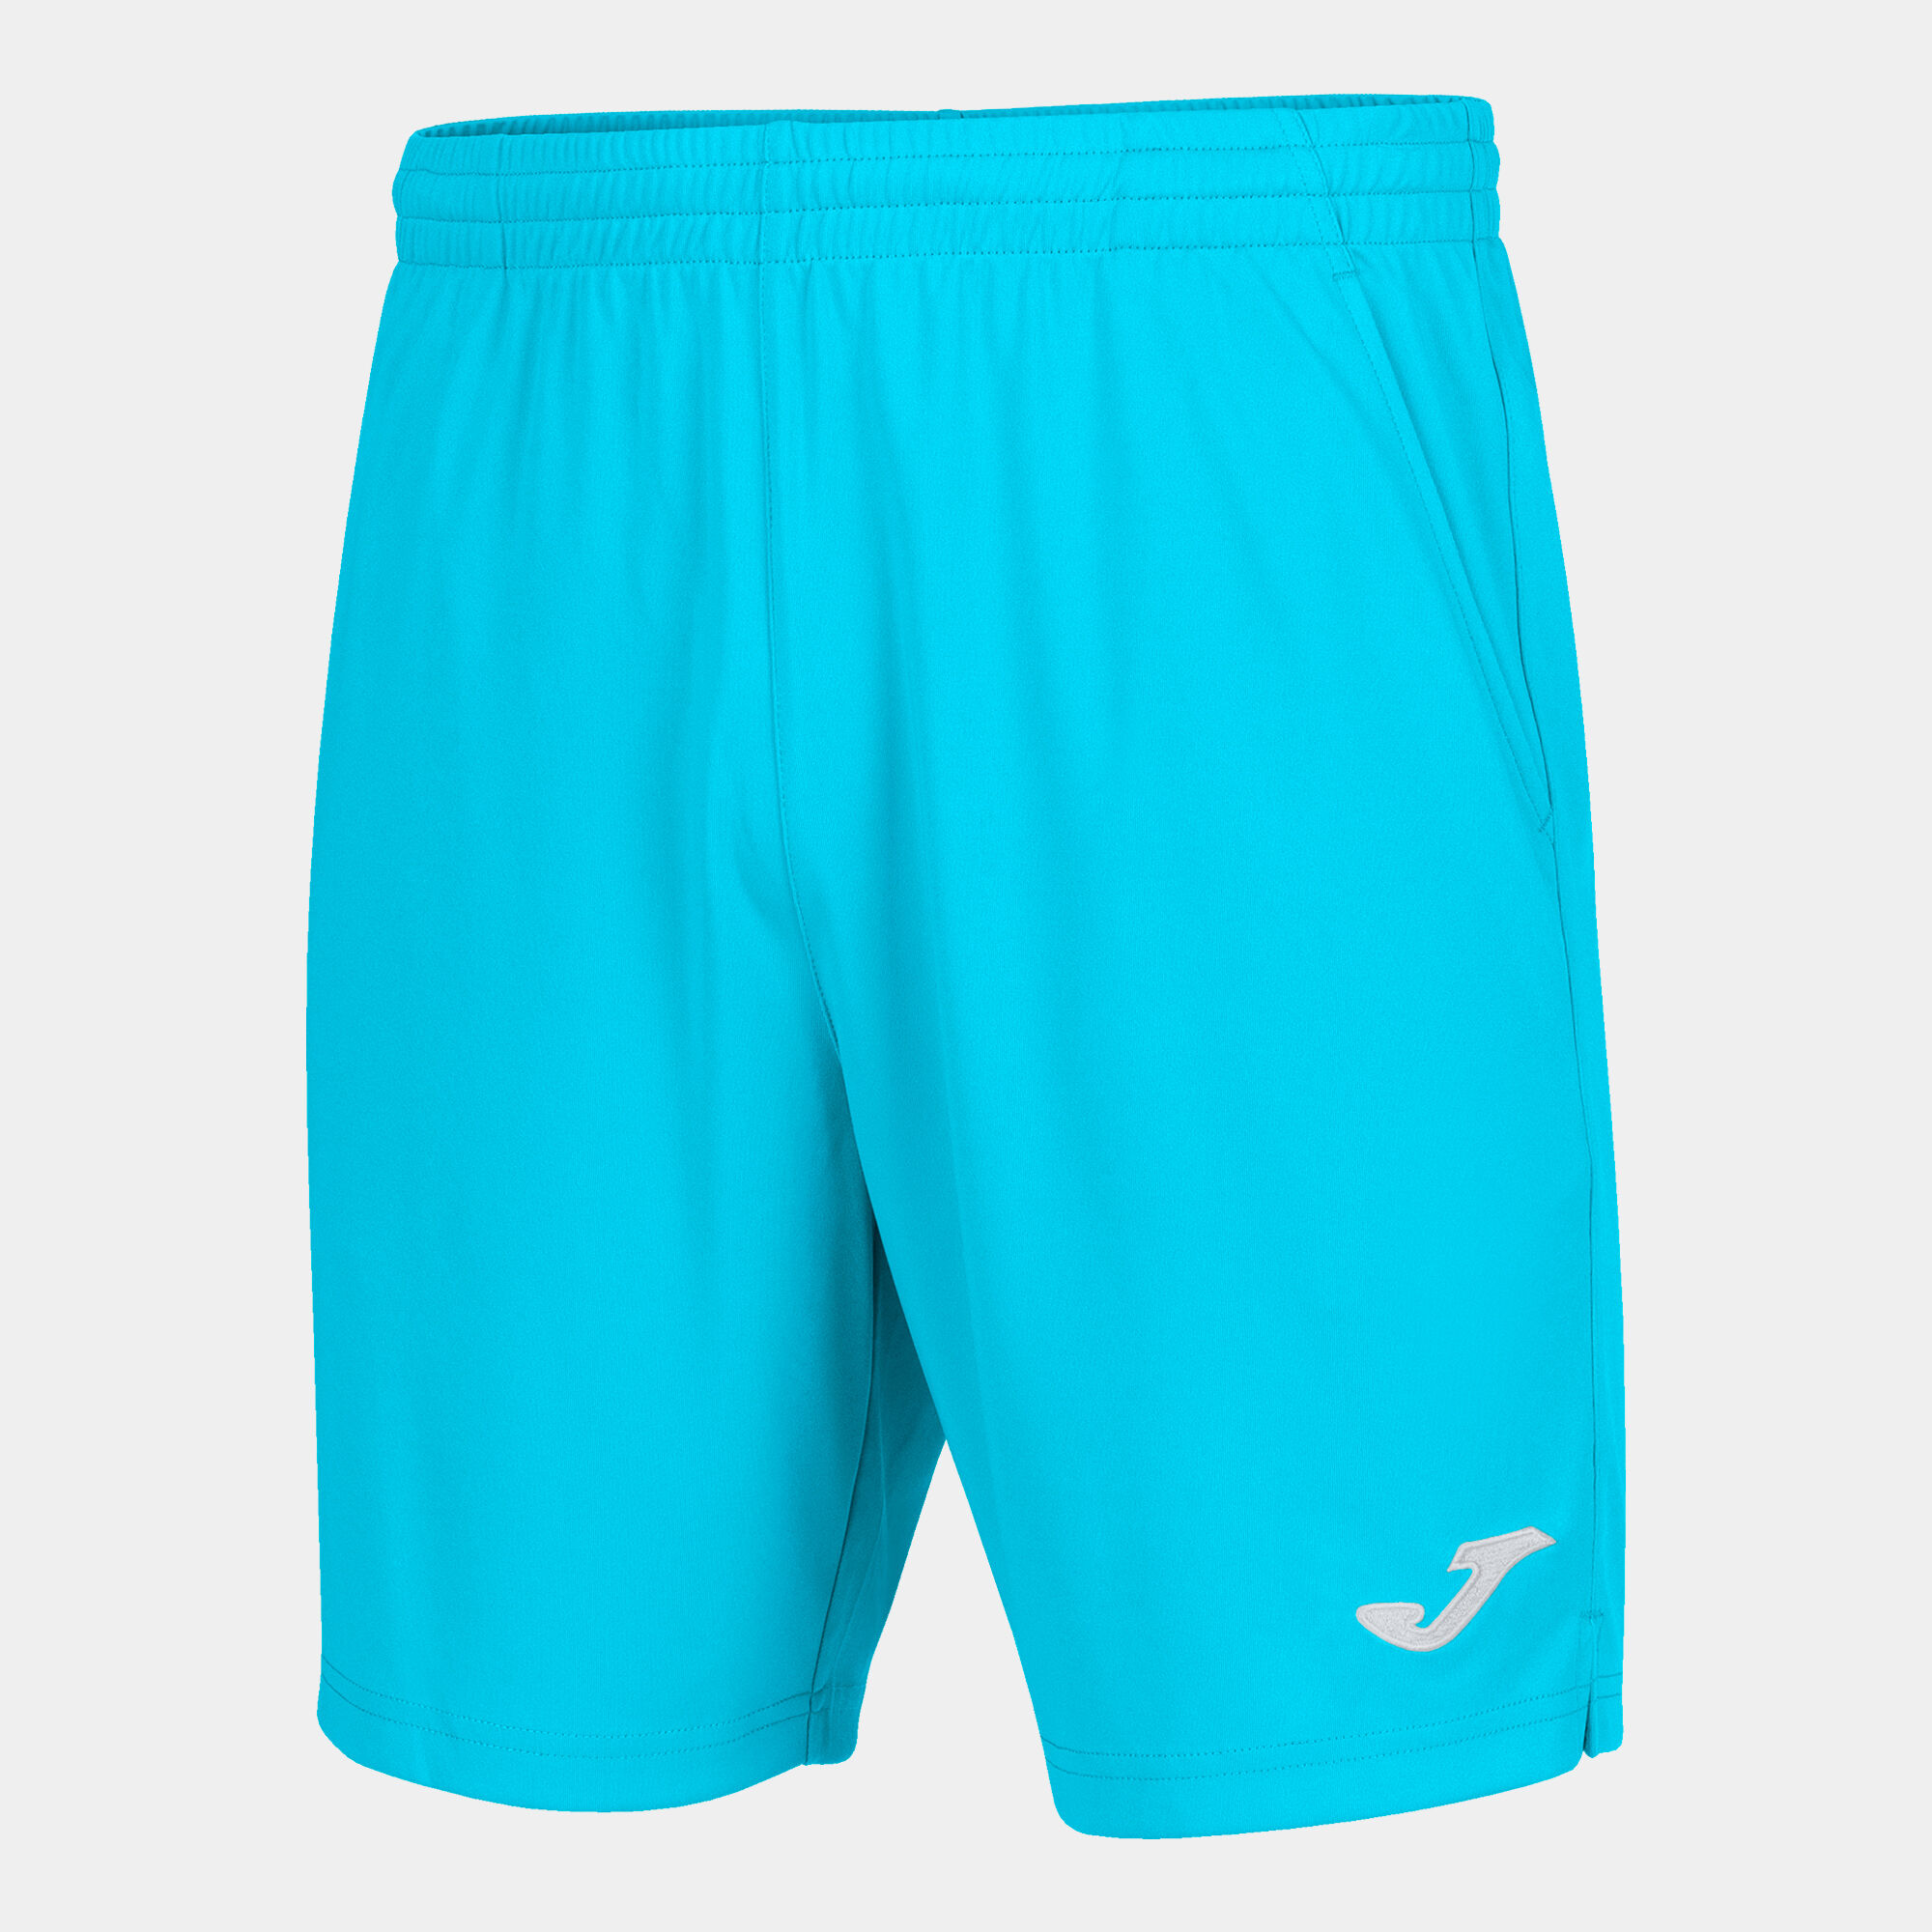 Bermuda shorts man Drive fluorescent turquoise